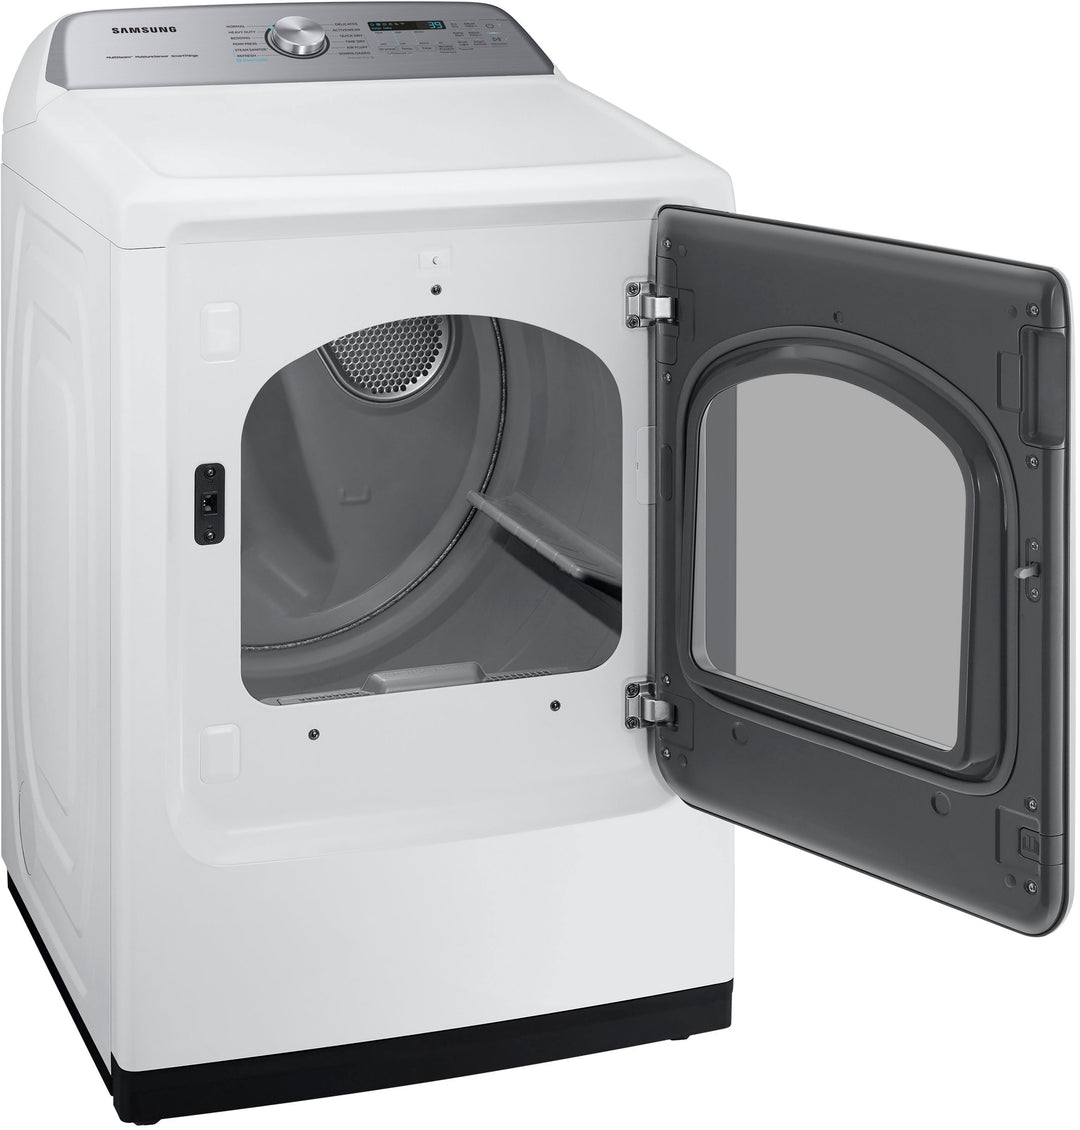 Samsung - 7.4 cu. ft. Smart Gas Dryer with Steam Sanitize+ - White_6